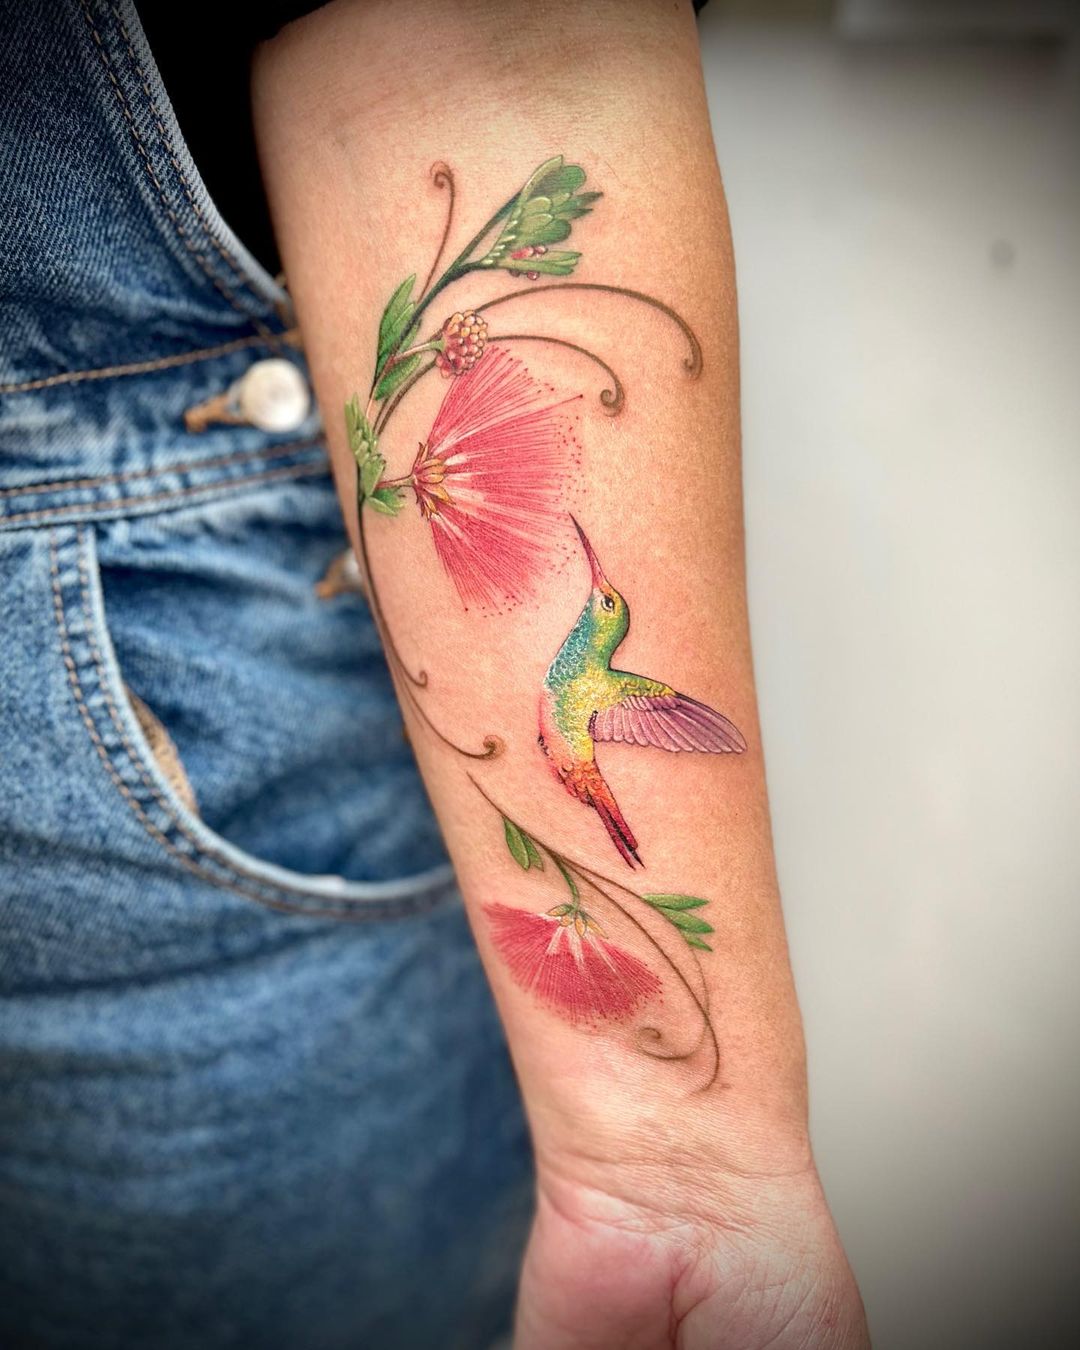 Flower and Hummingbird Tattoo on Arm